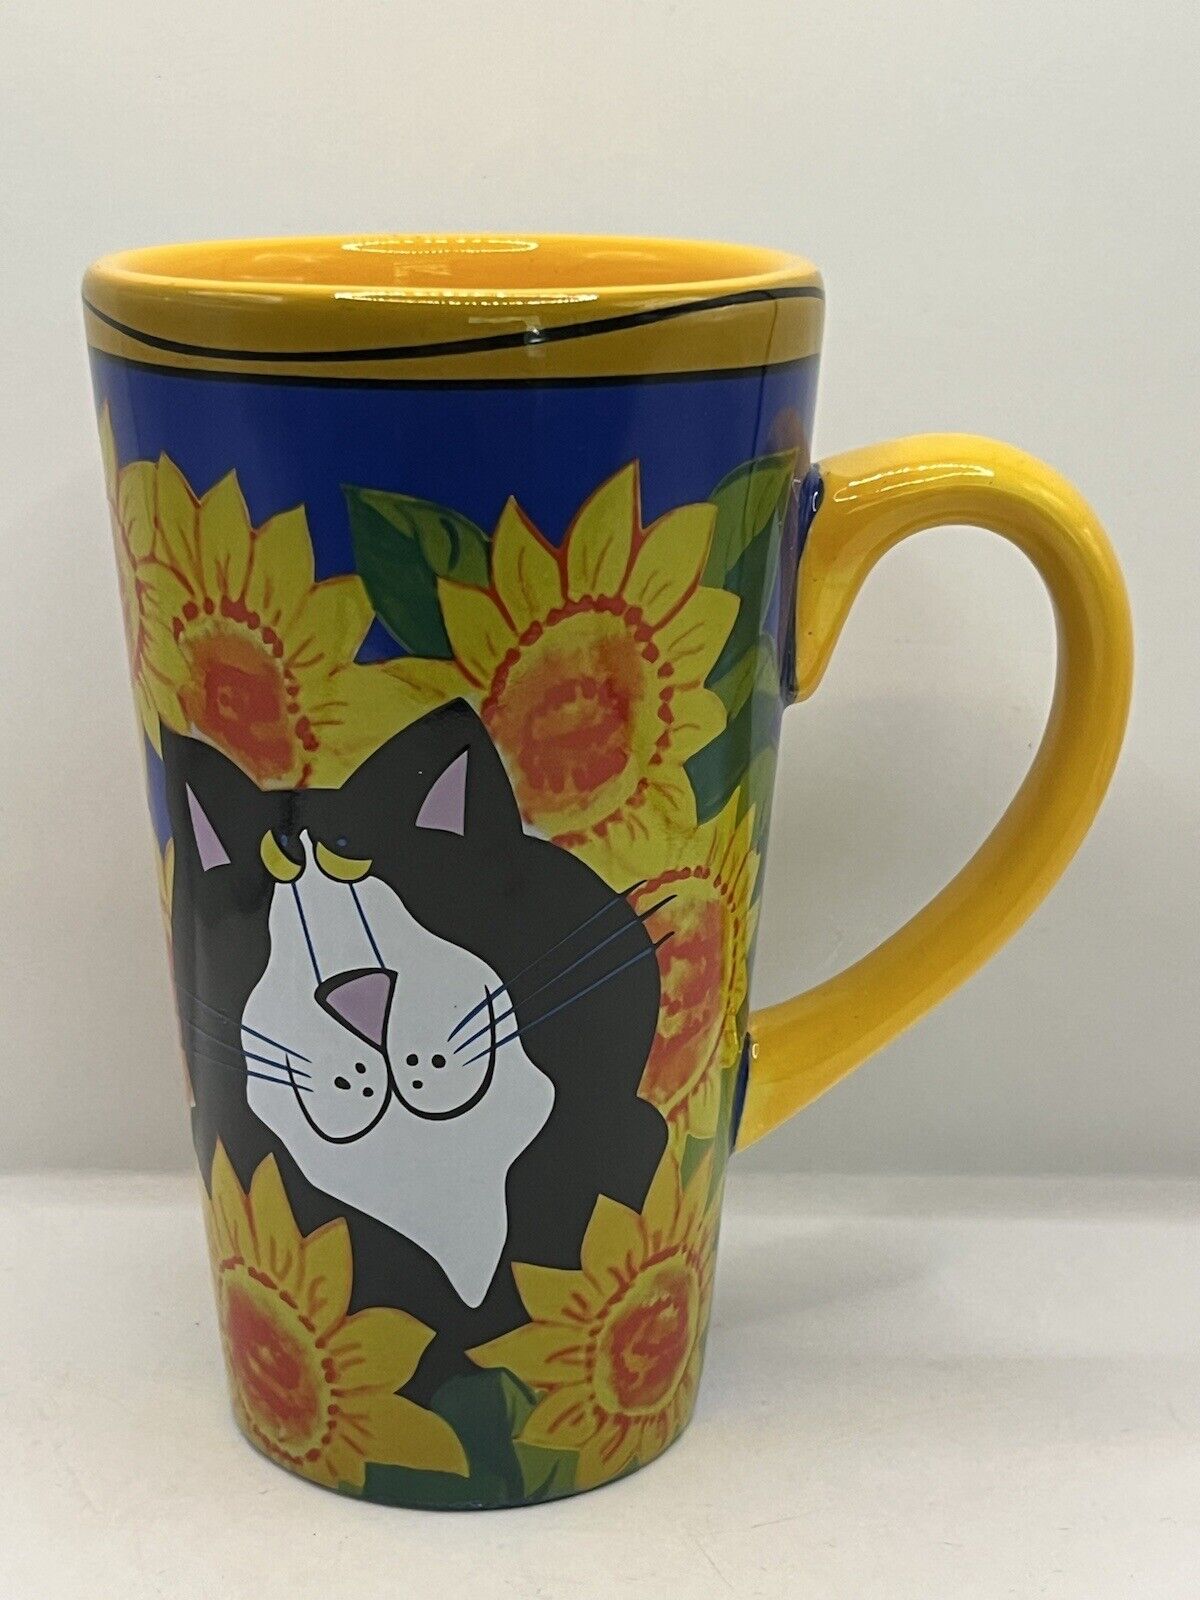 Catzilla Candace Reiter Designs Cats Hiding Among Sunflowers Mug 